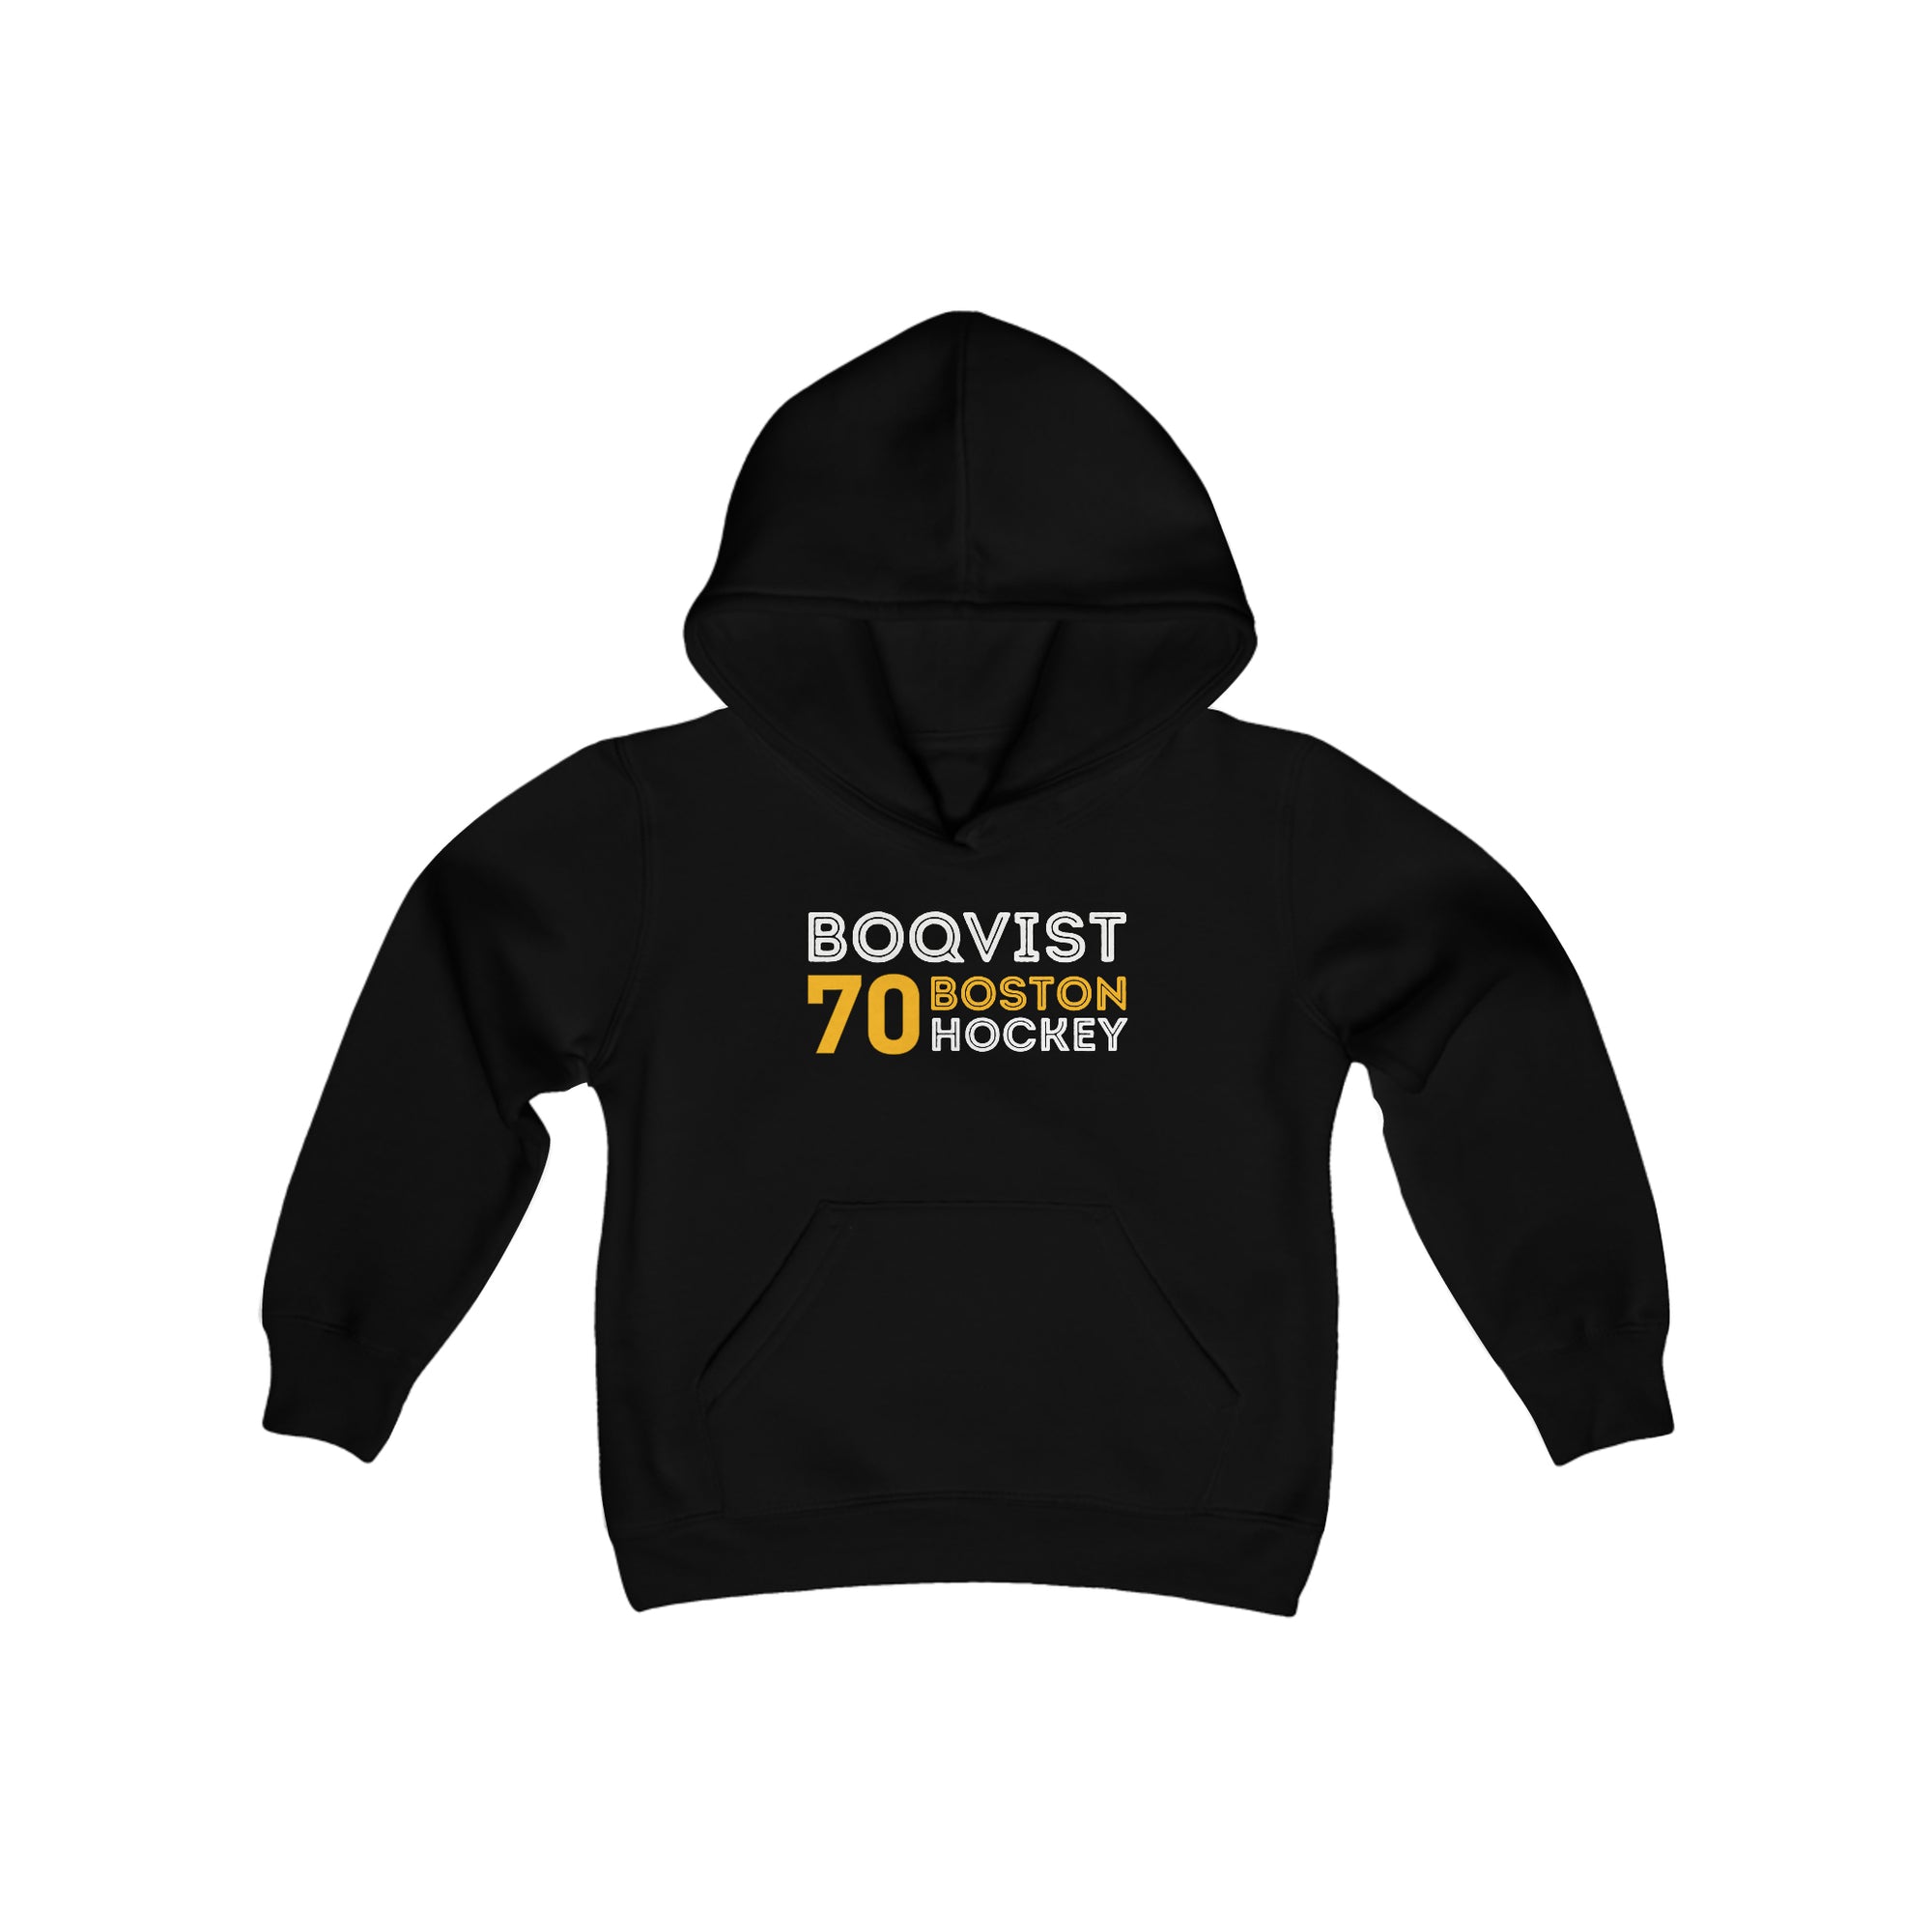 Boqvist 70 Boston Hockey Grafitti Wall Design Youth Hooded Sweatshirt